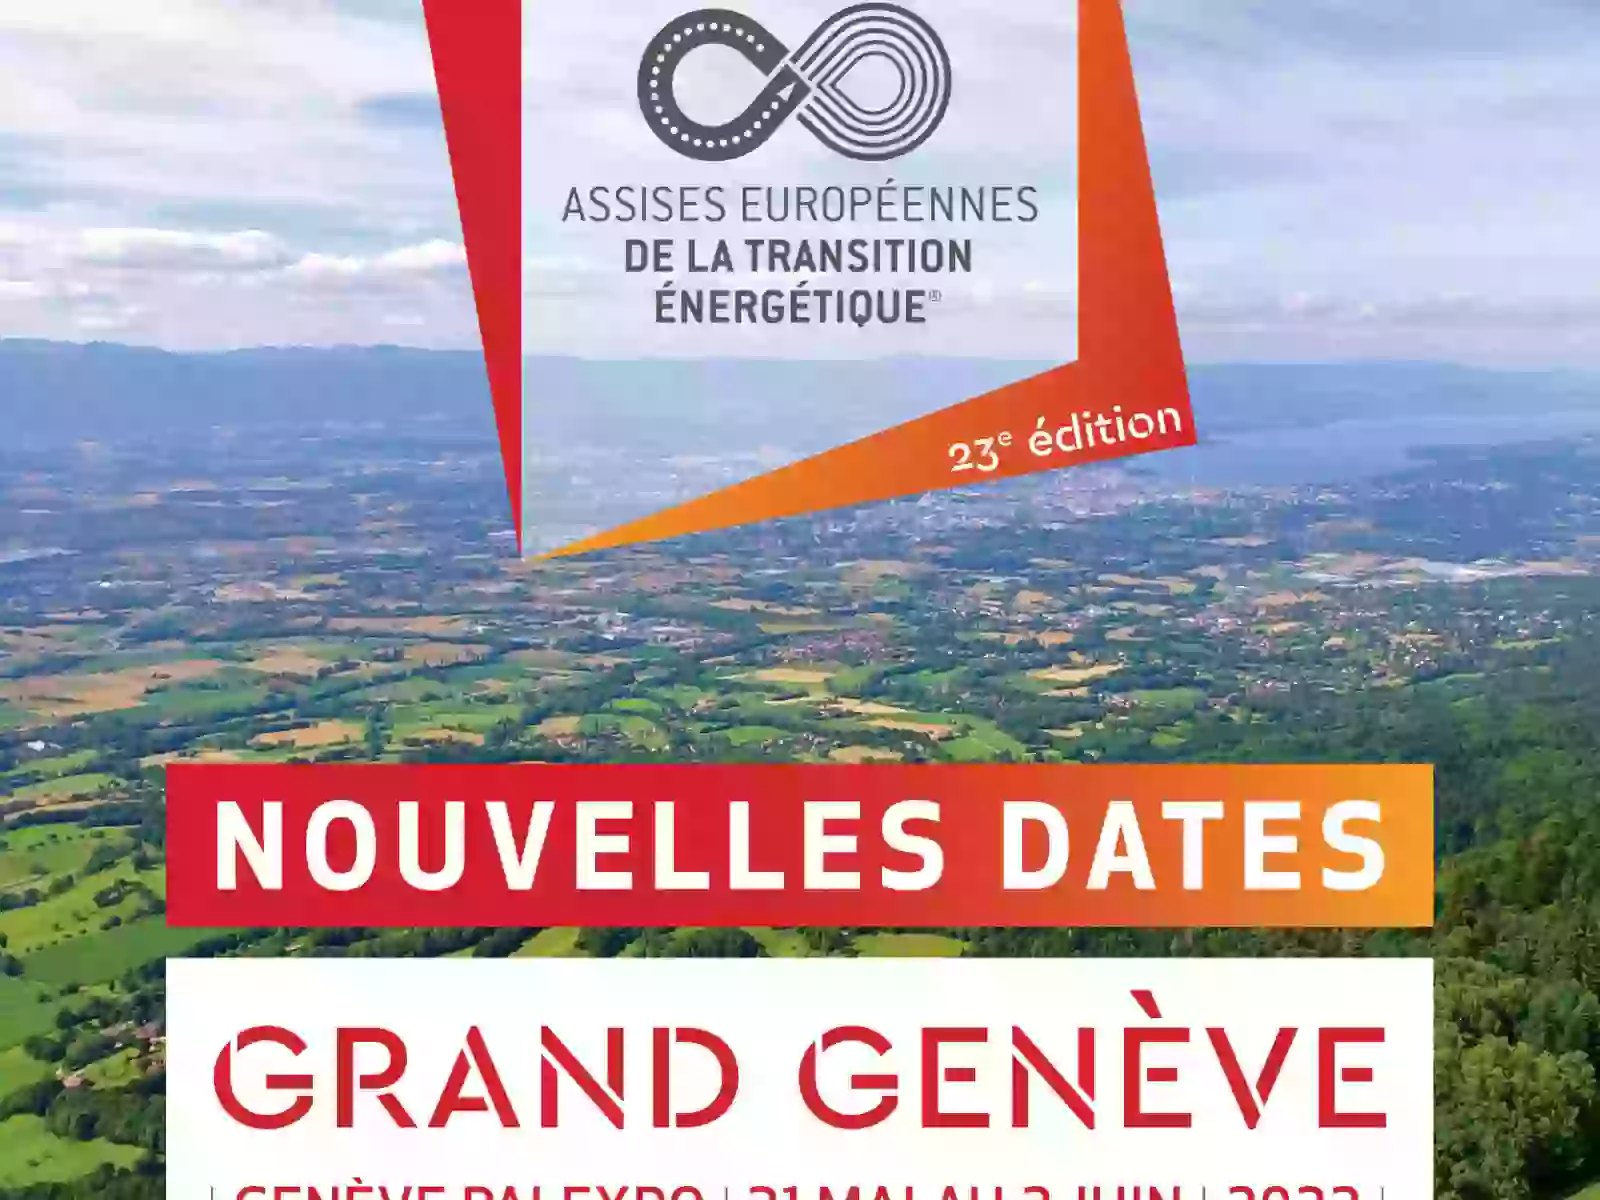 assiseseuropenne-transition-energetique2022-report-grandgeneve